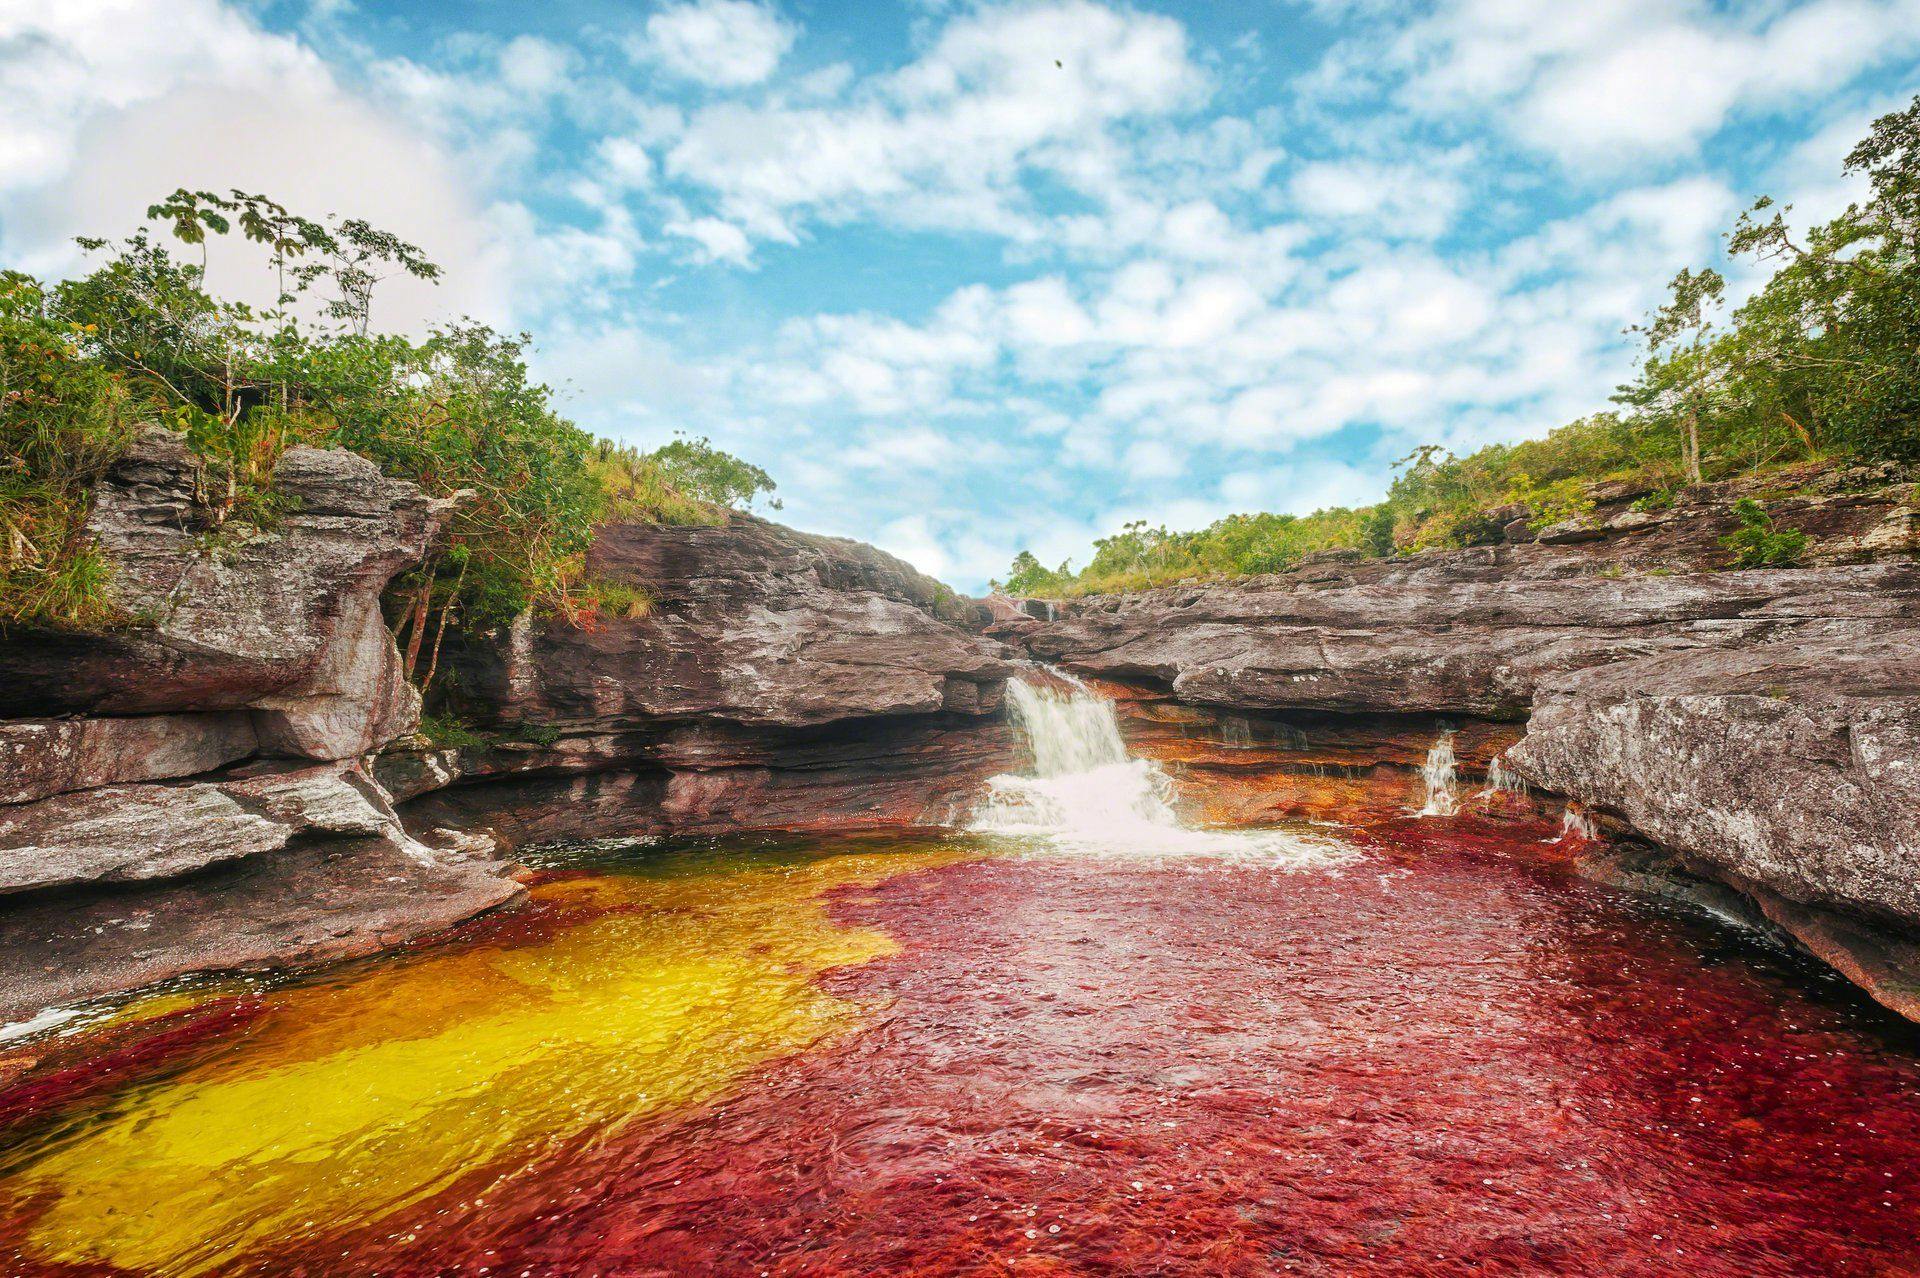 The Liquid Rainbow, Cano Cristales river in Colombia